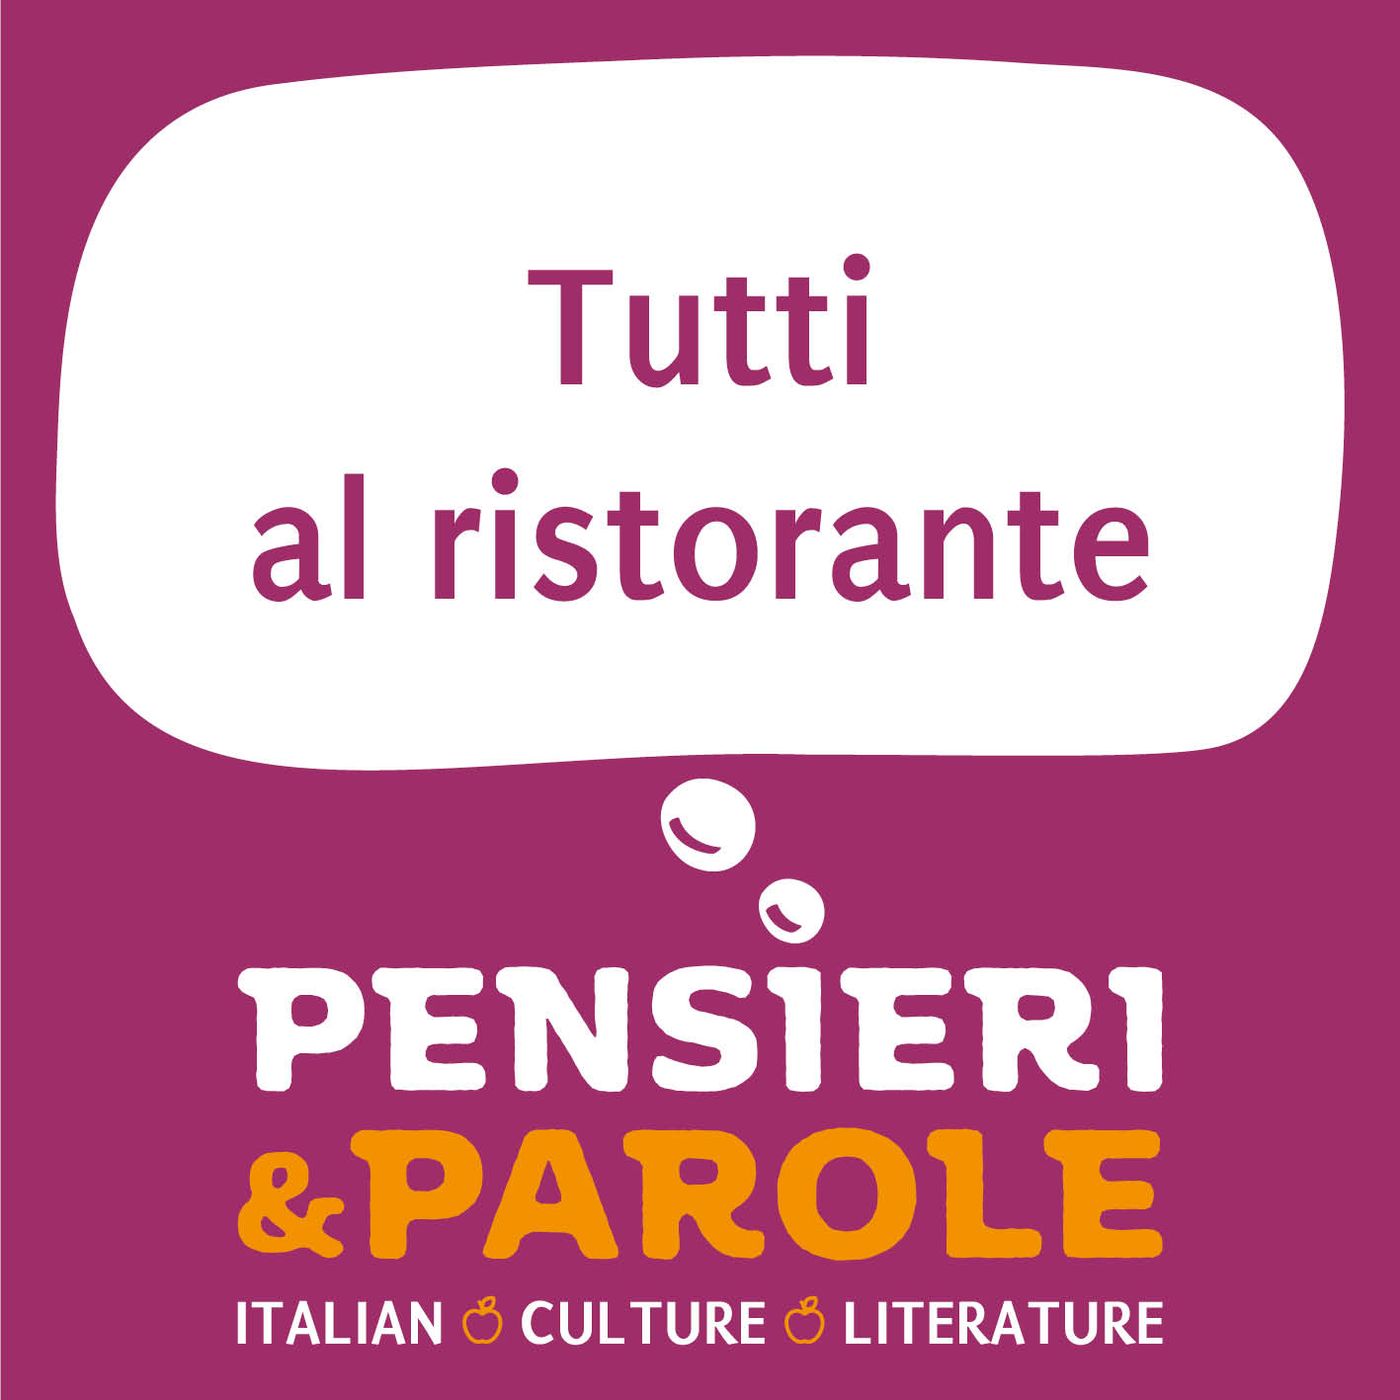 She speaks italian. Pensieri. Плакат tutto andra bene. Tutto bene перевод. Tutto bene этикетка.